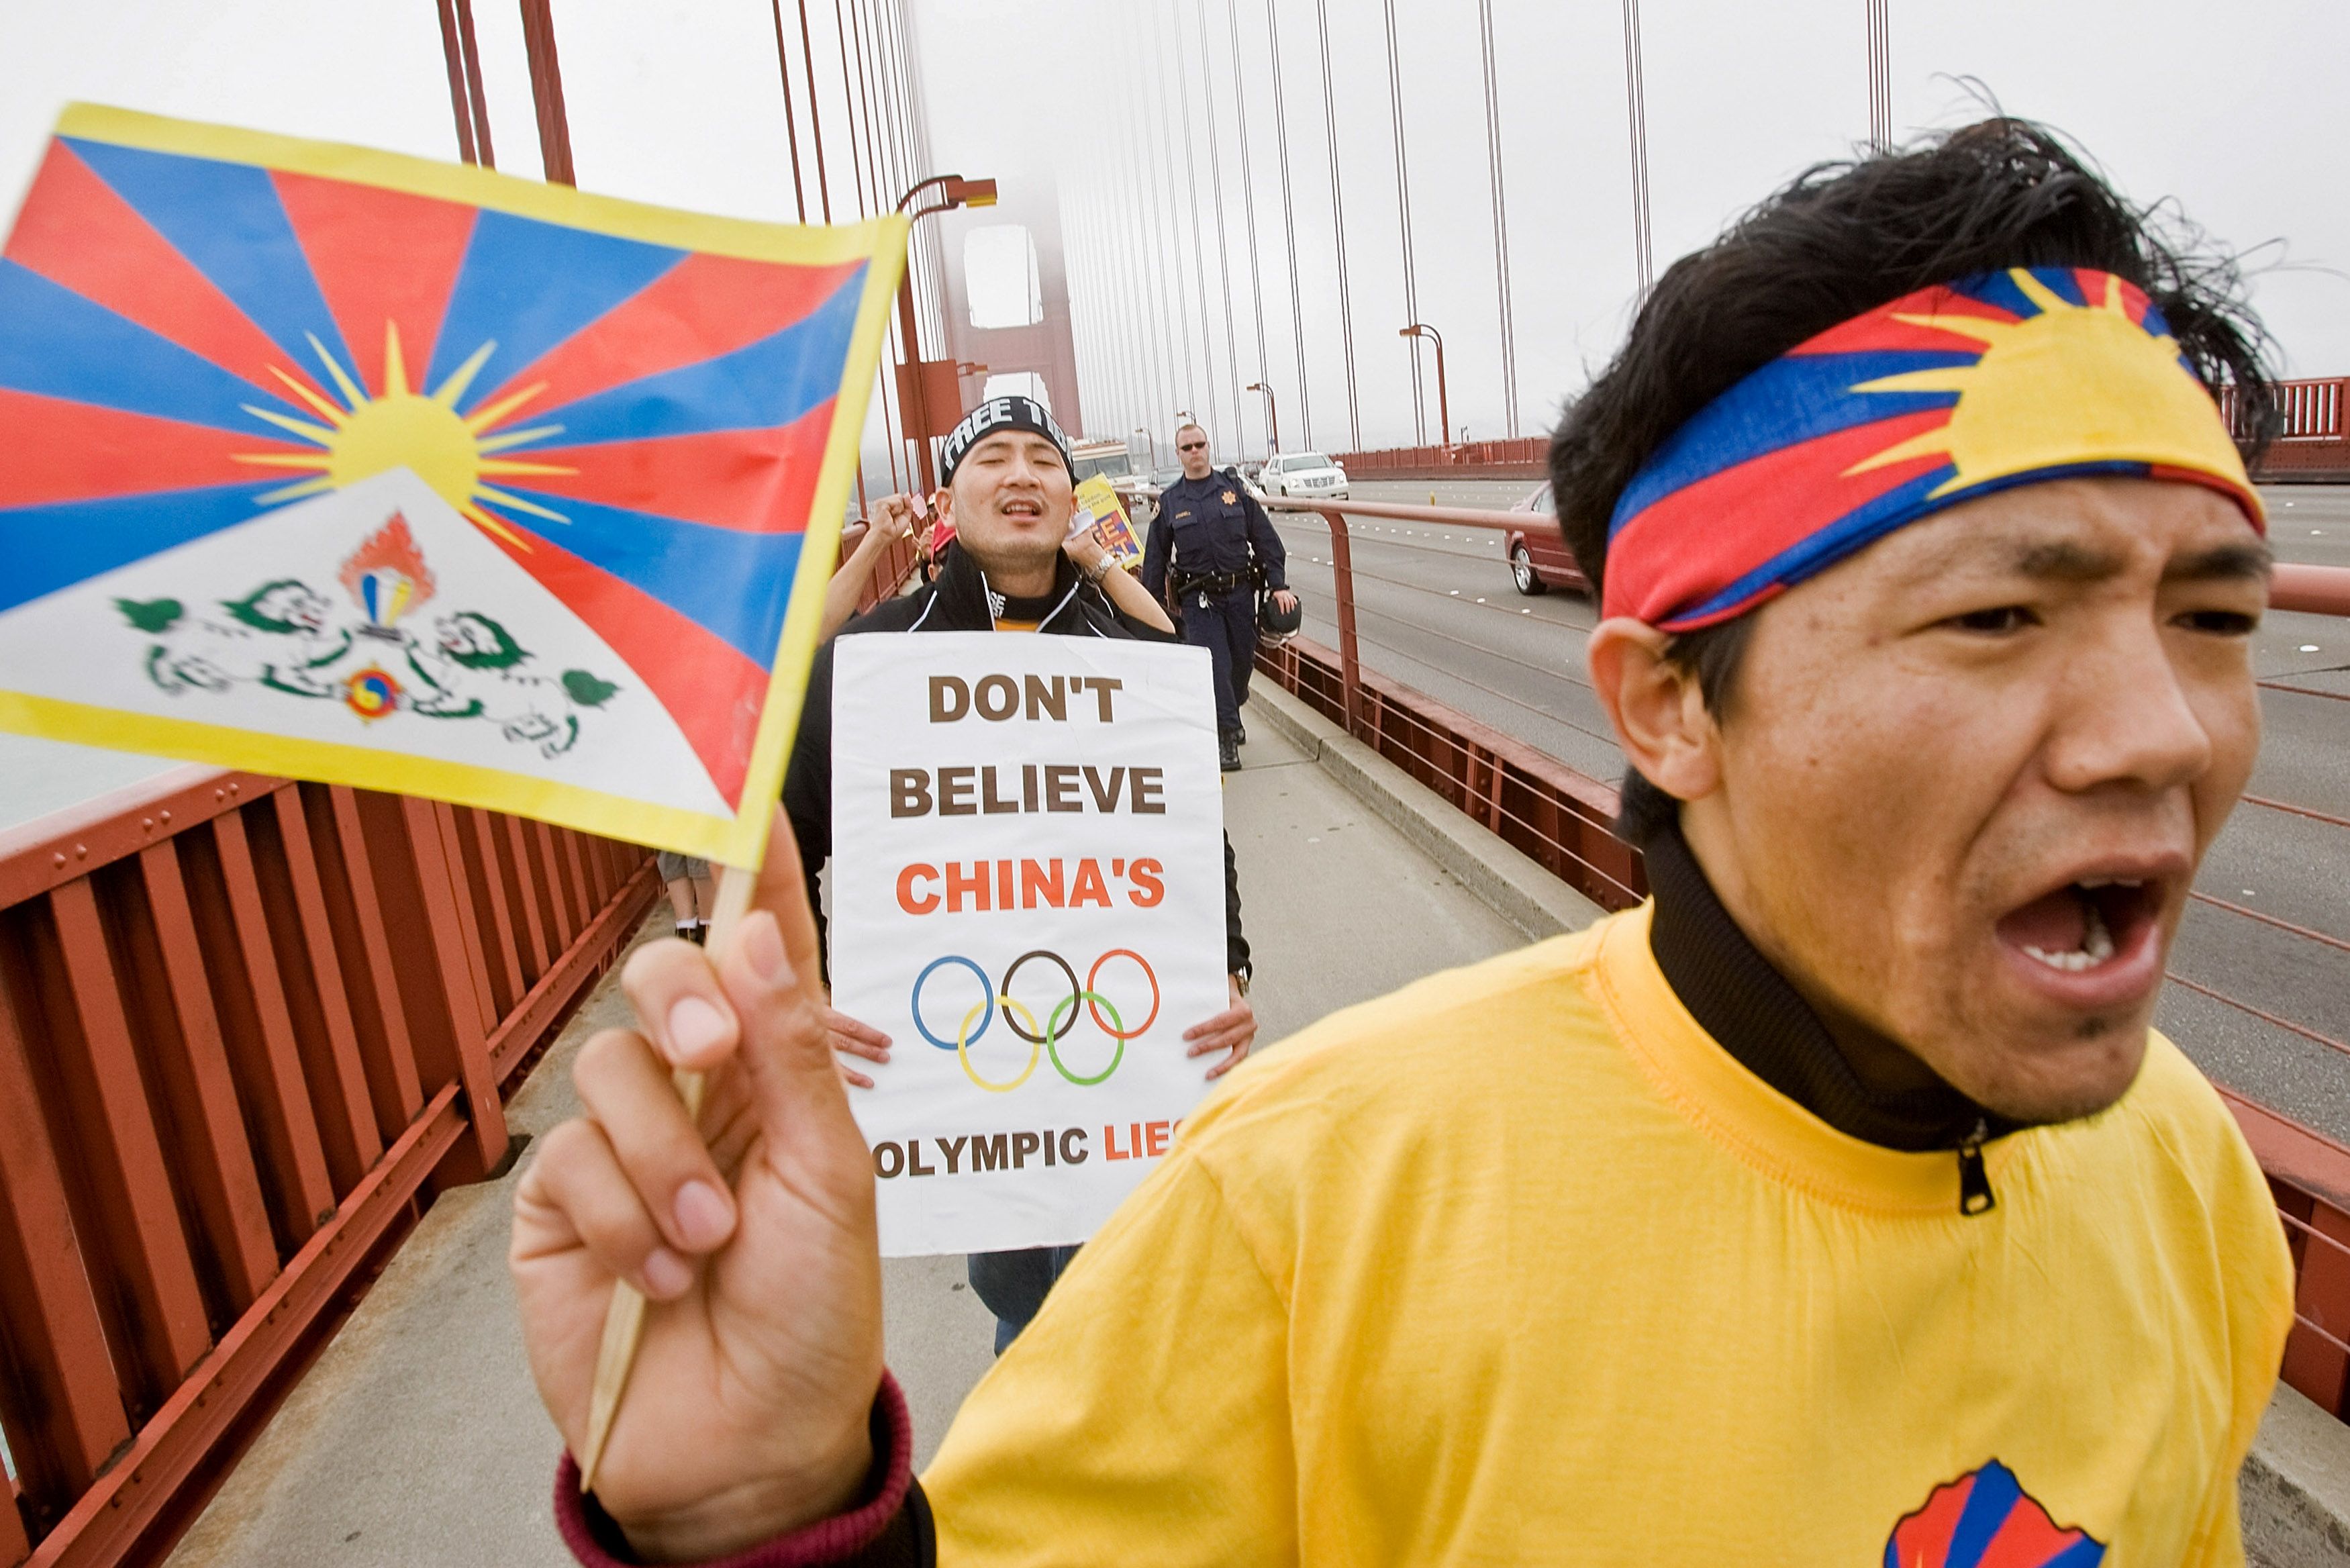 Protestors on the Golden Gate Bridge